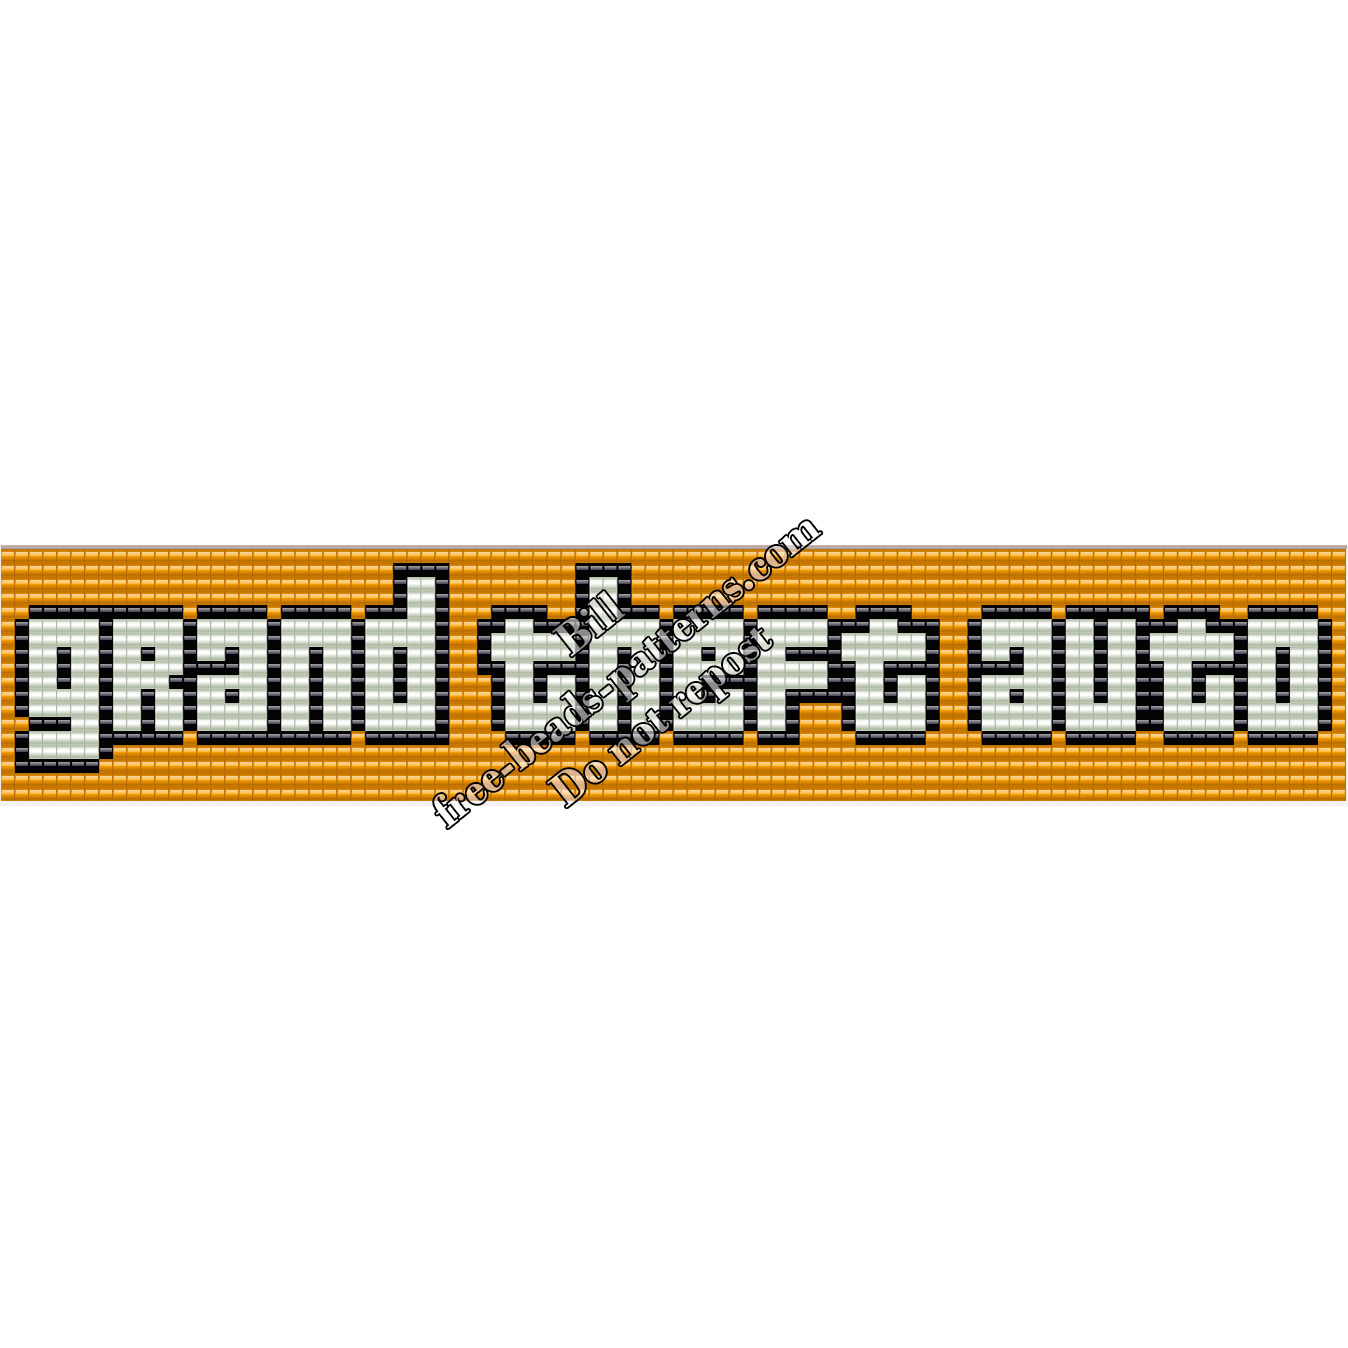 Grand Theft Auto logo free perler beads pattern (2)